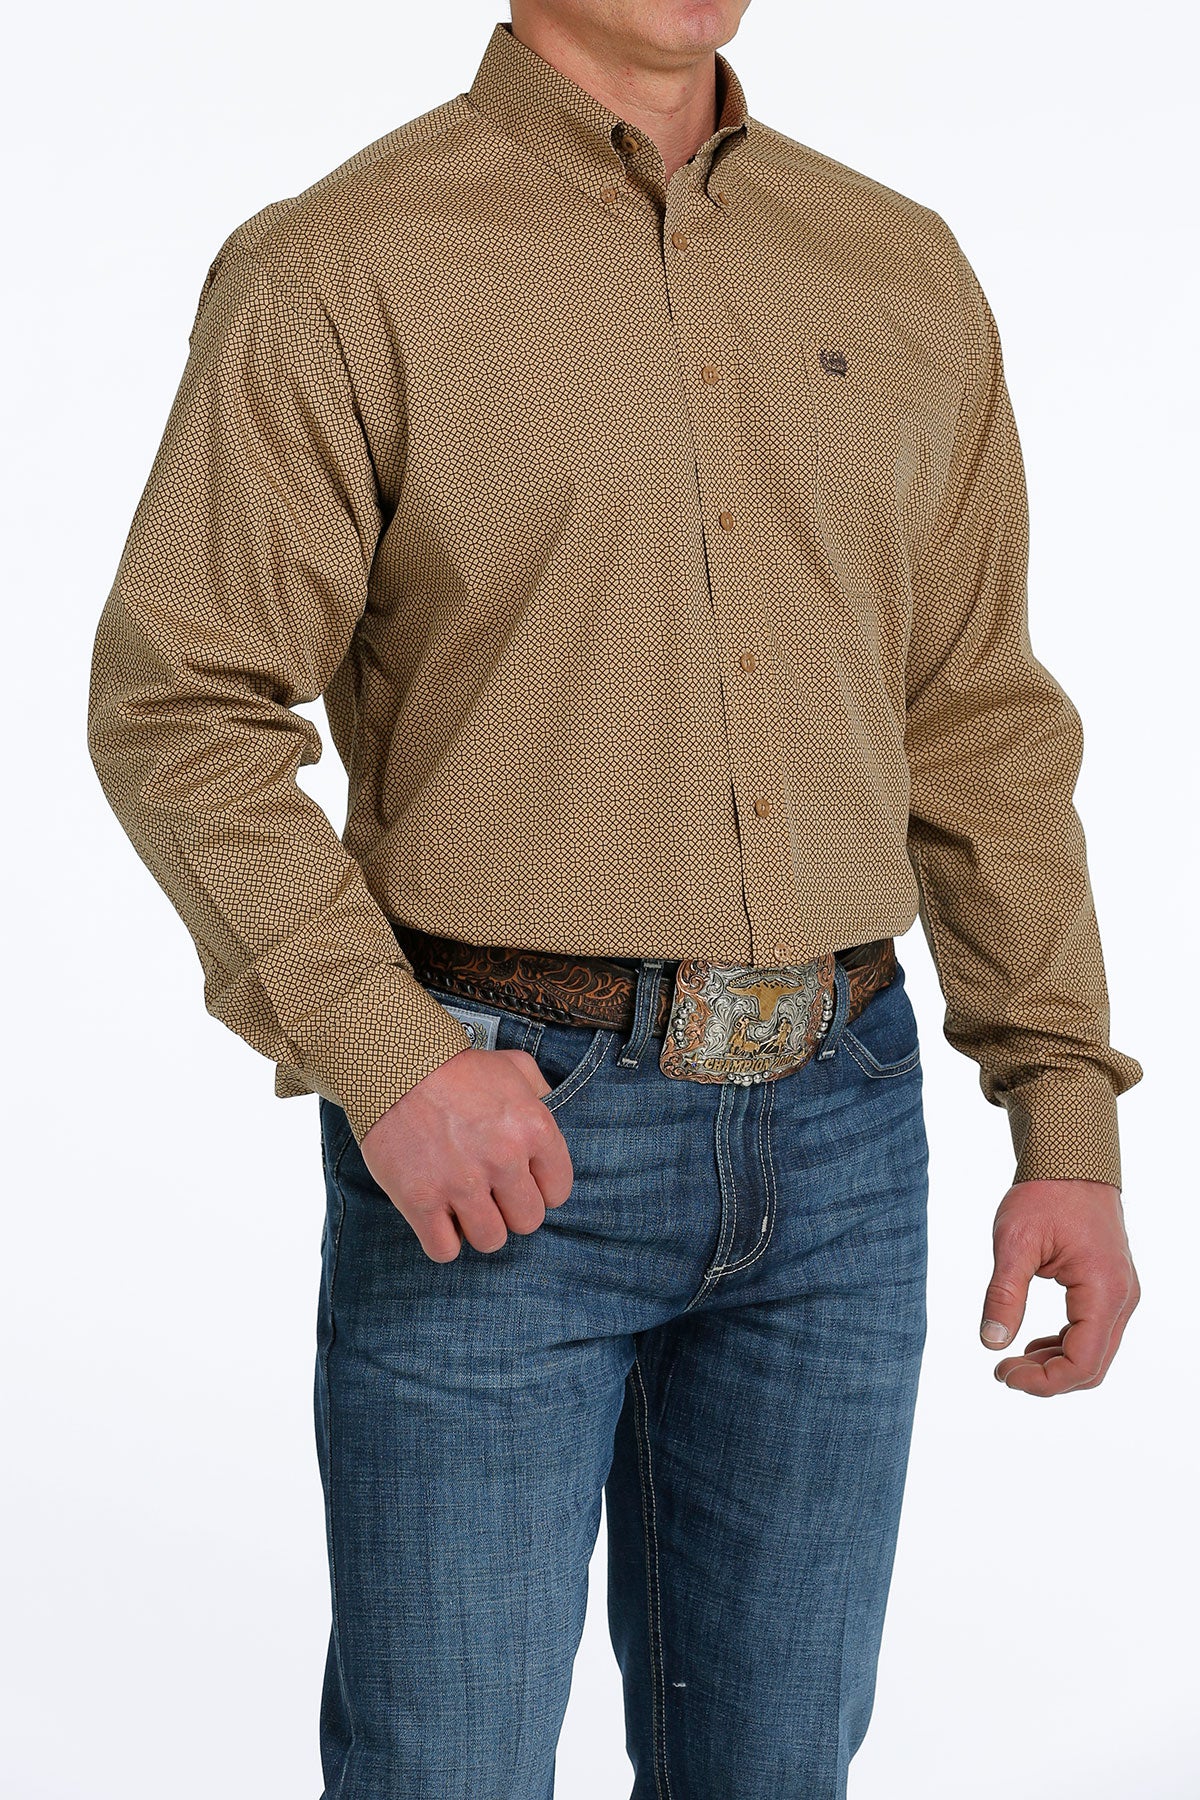 CINCH Men's Khaki Print Long Sleeve Western Shirt